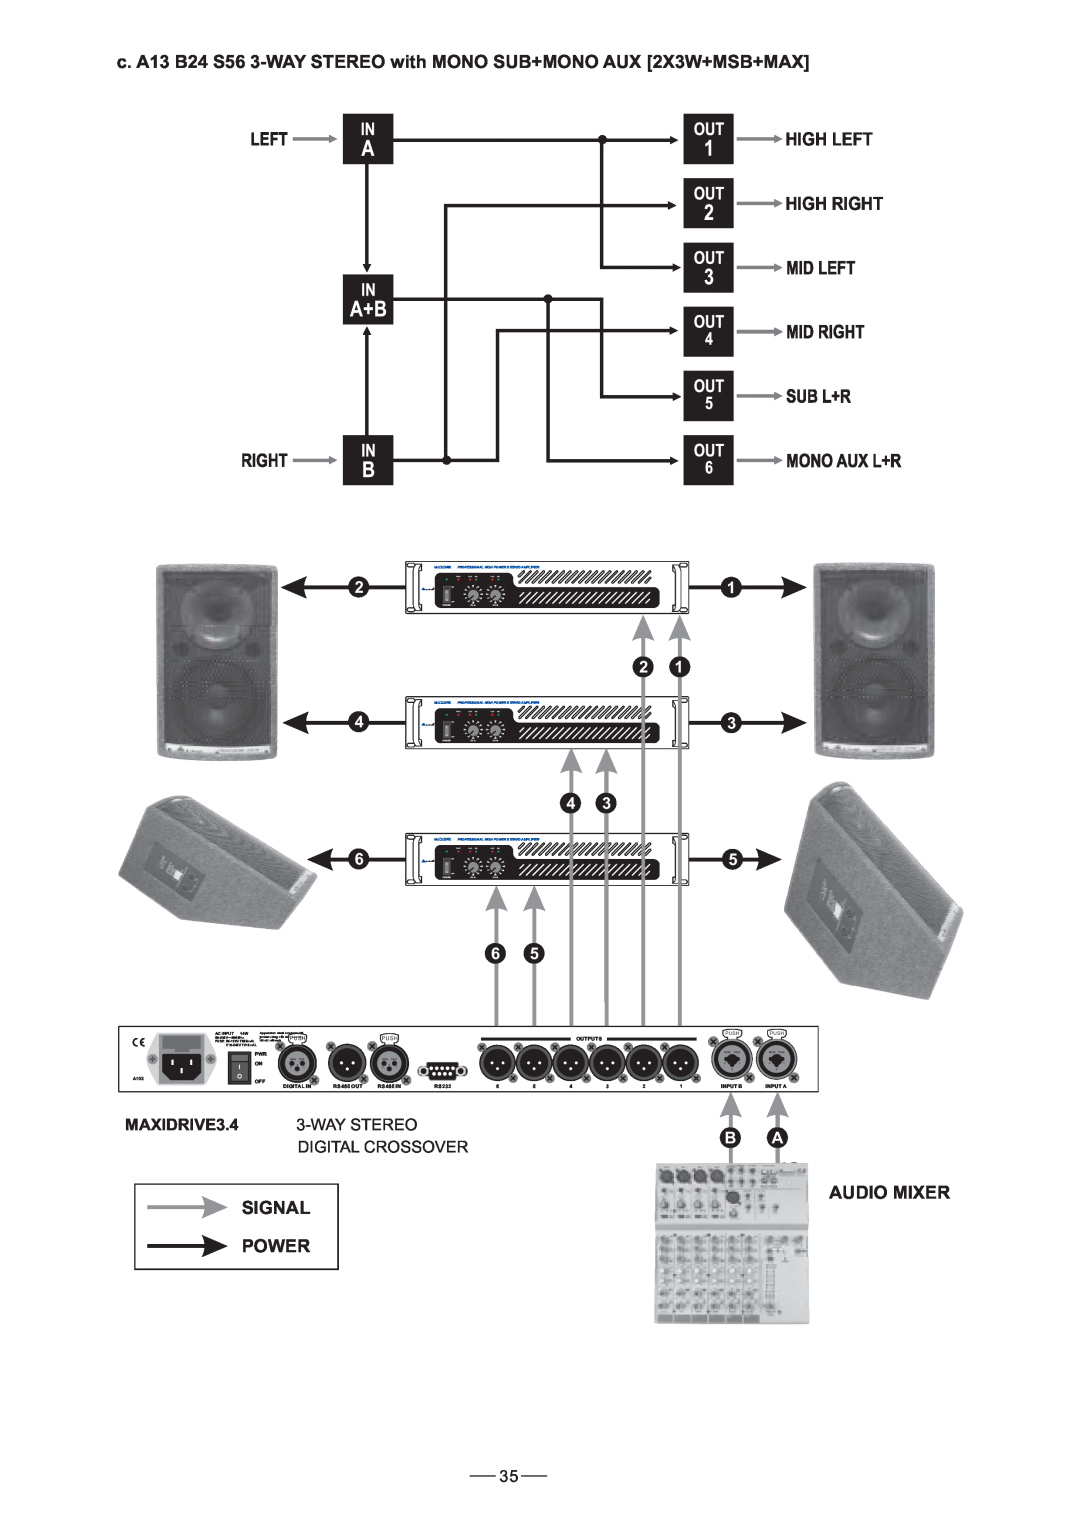 Nilfisk-ALTO 3.4 user manual High Left High Right, Signal Power, Audio Mixer, Waystereo, Digital Crossover 